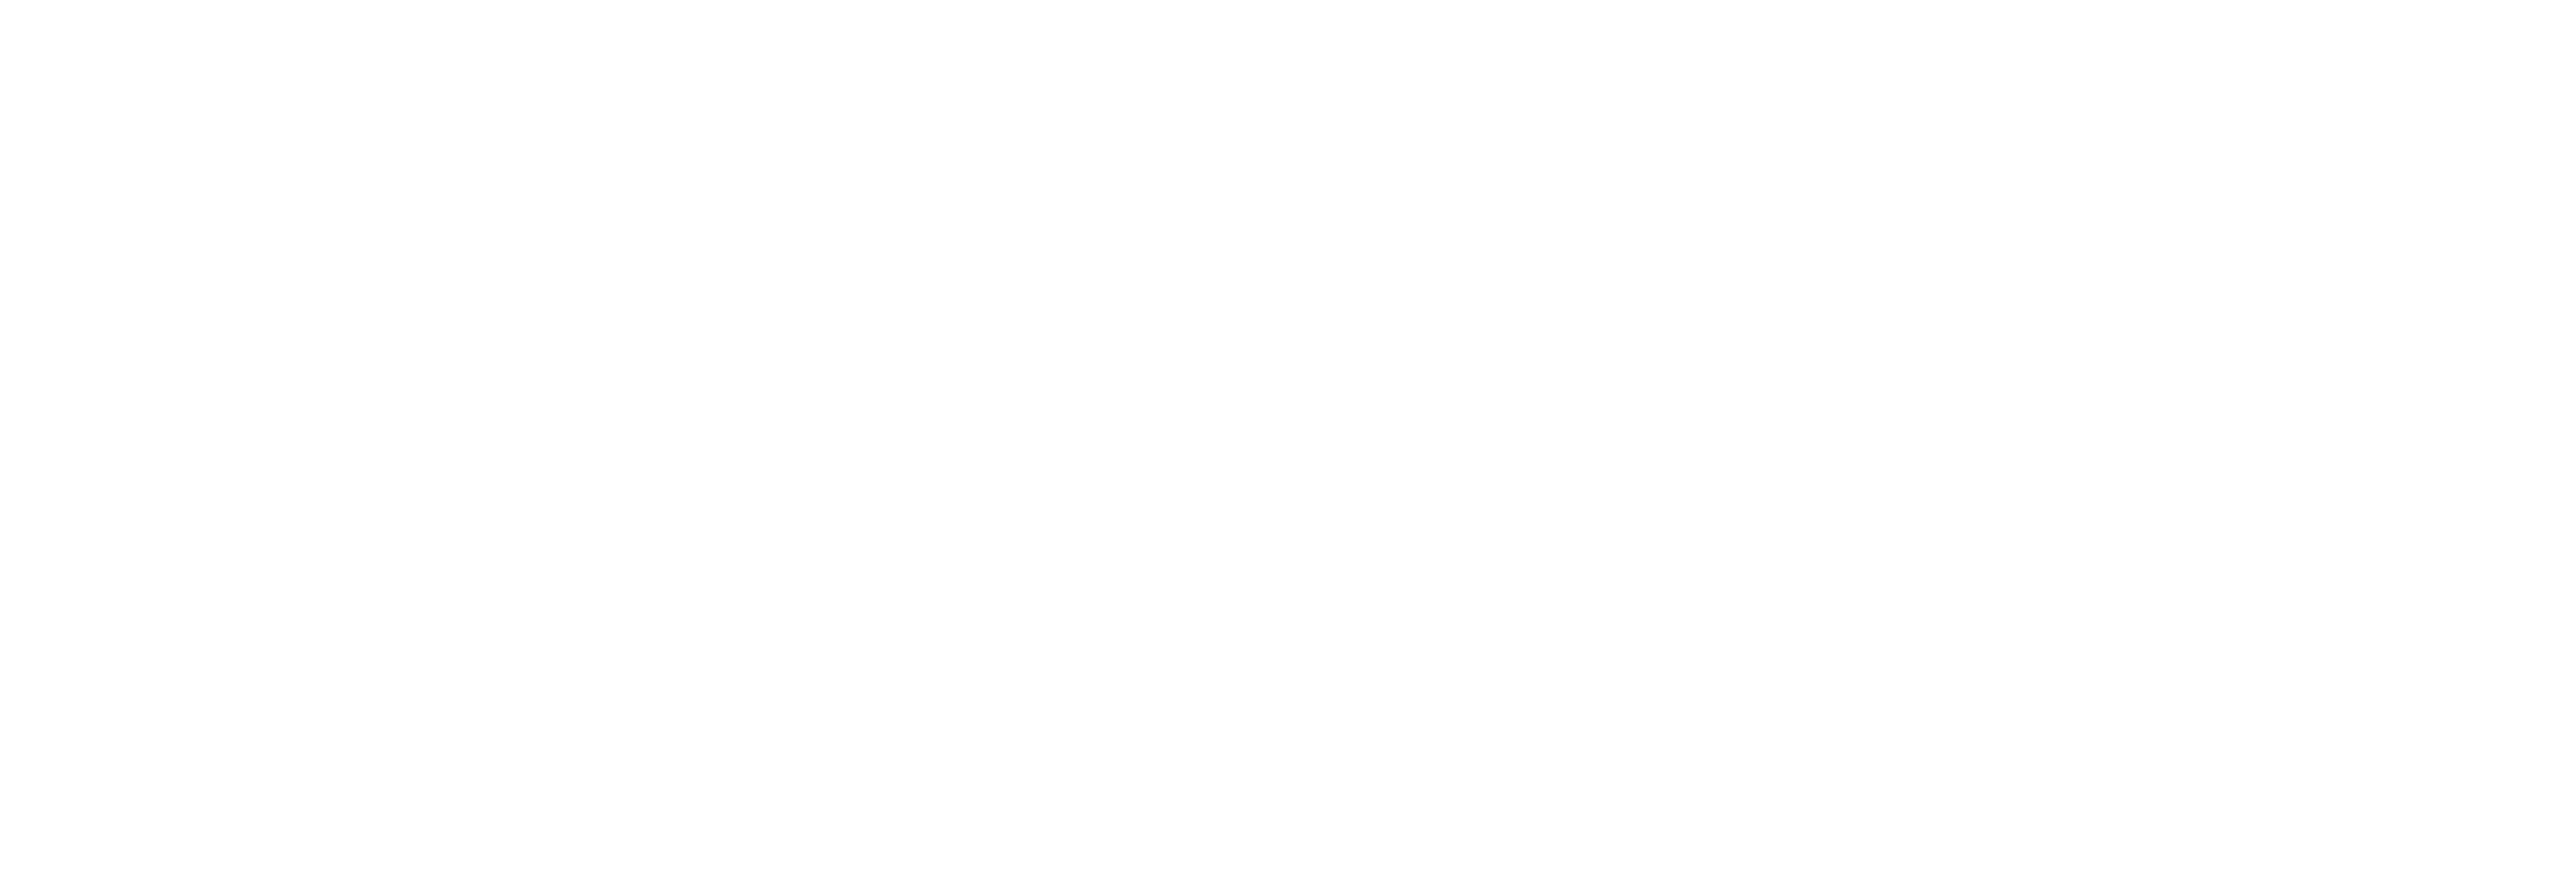 PARIS BACHATA FESTIVAL 2022